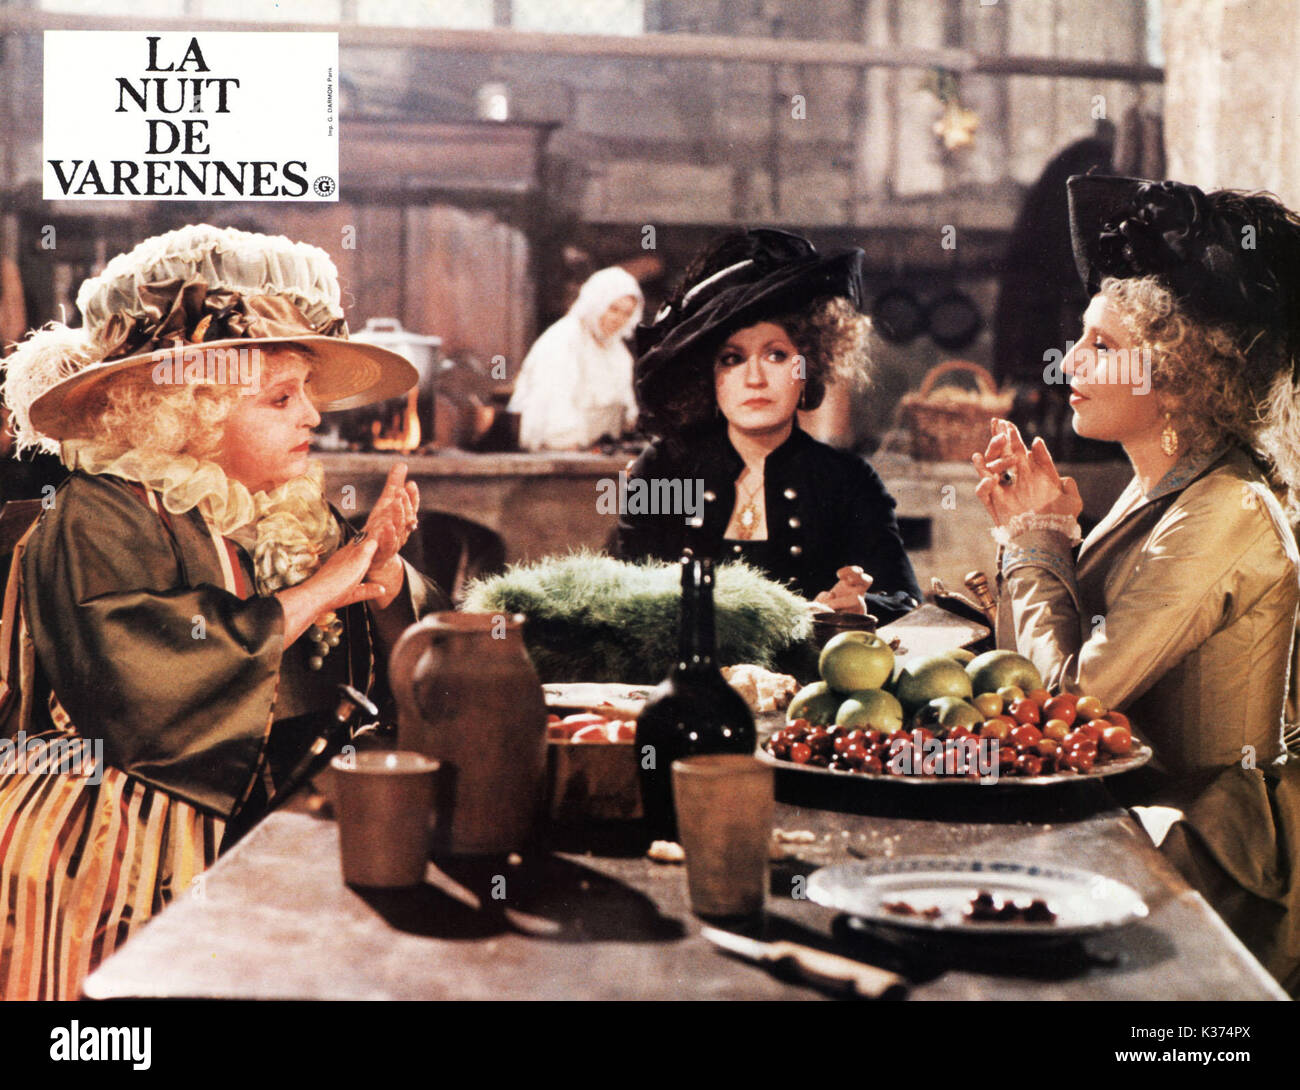 LA NUIT DE VARENNES LUARA BETTI, ANDREA FERROL und Hanna Schygulla ein GAUMONT FILM Datum: 1982 Stockfoto